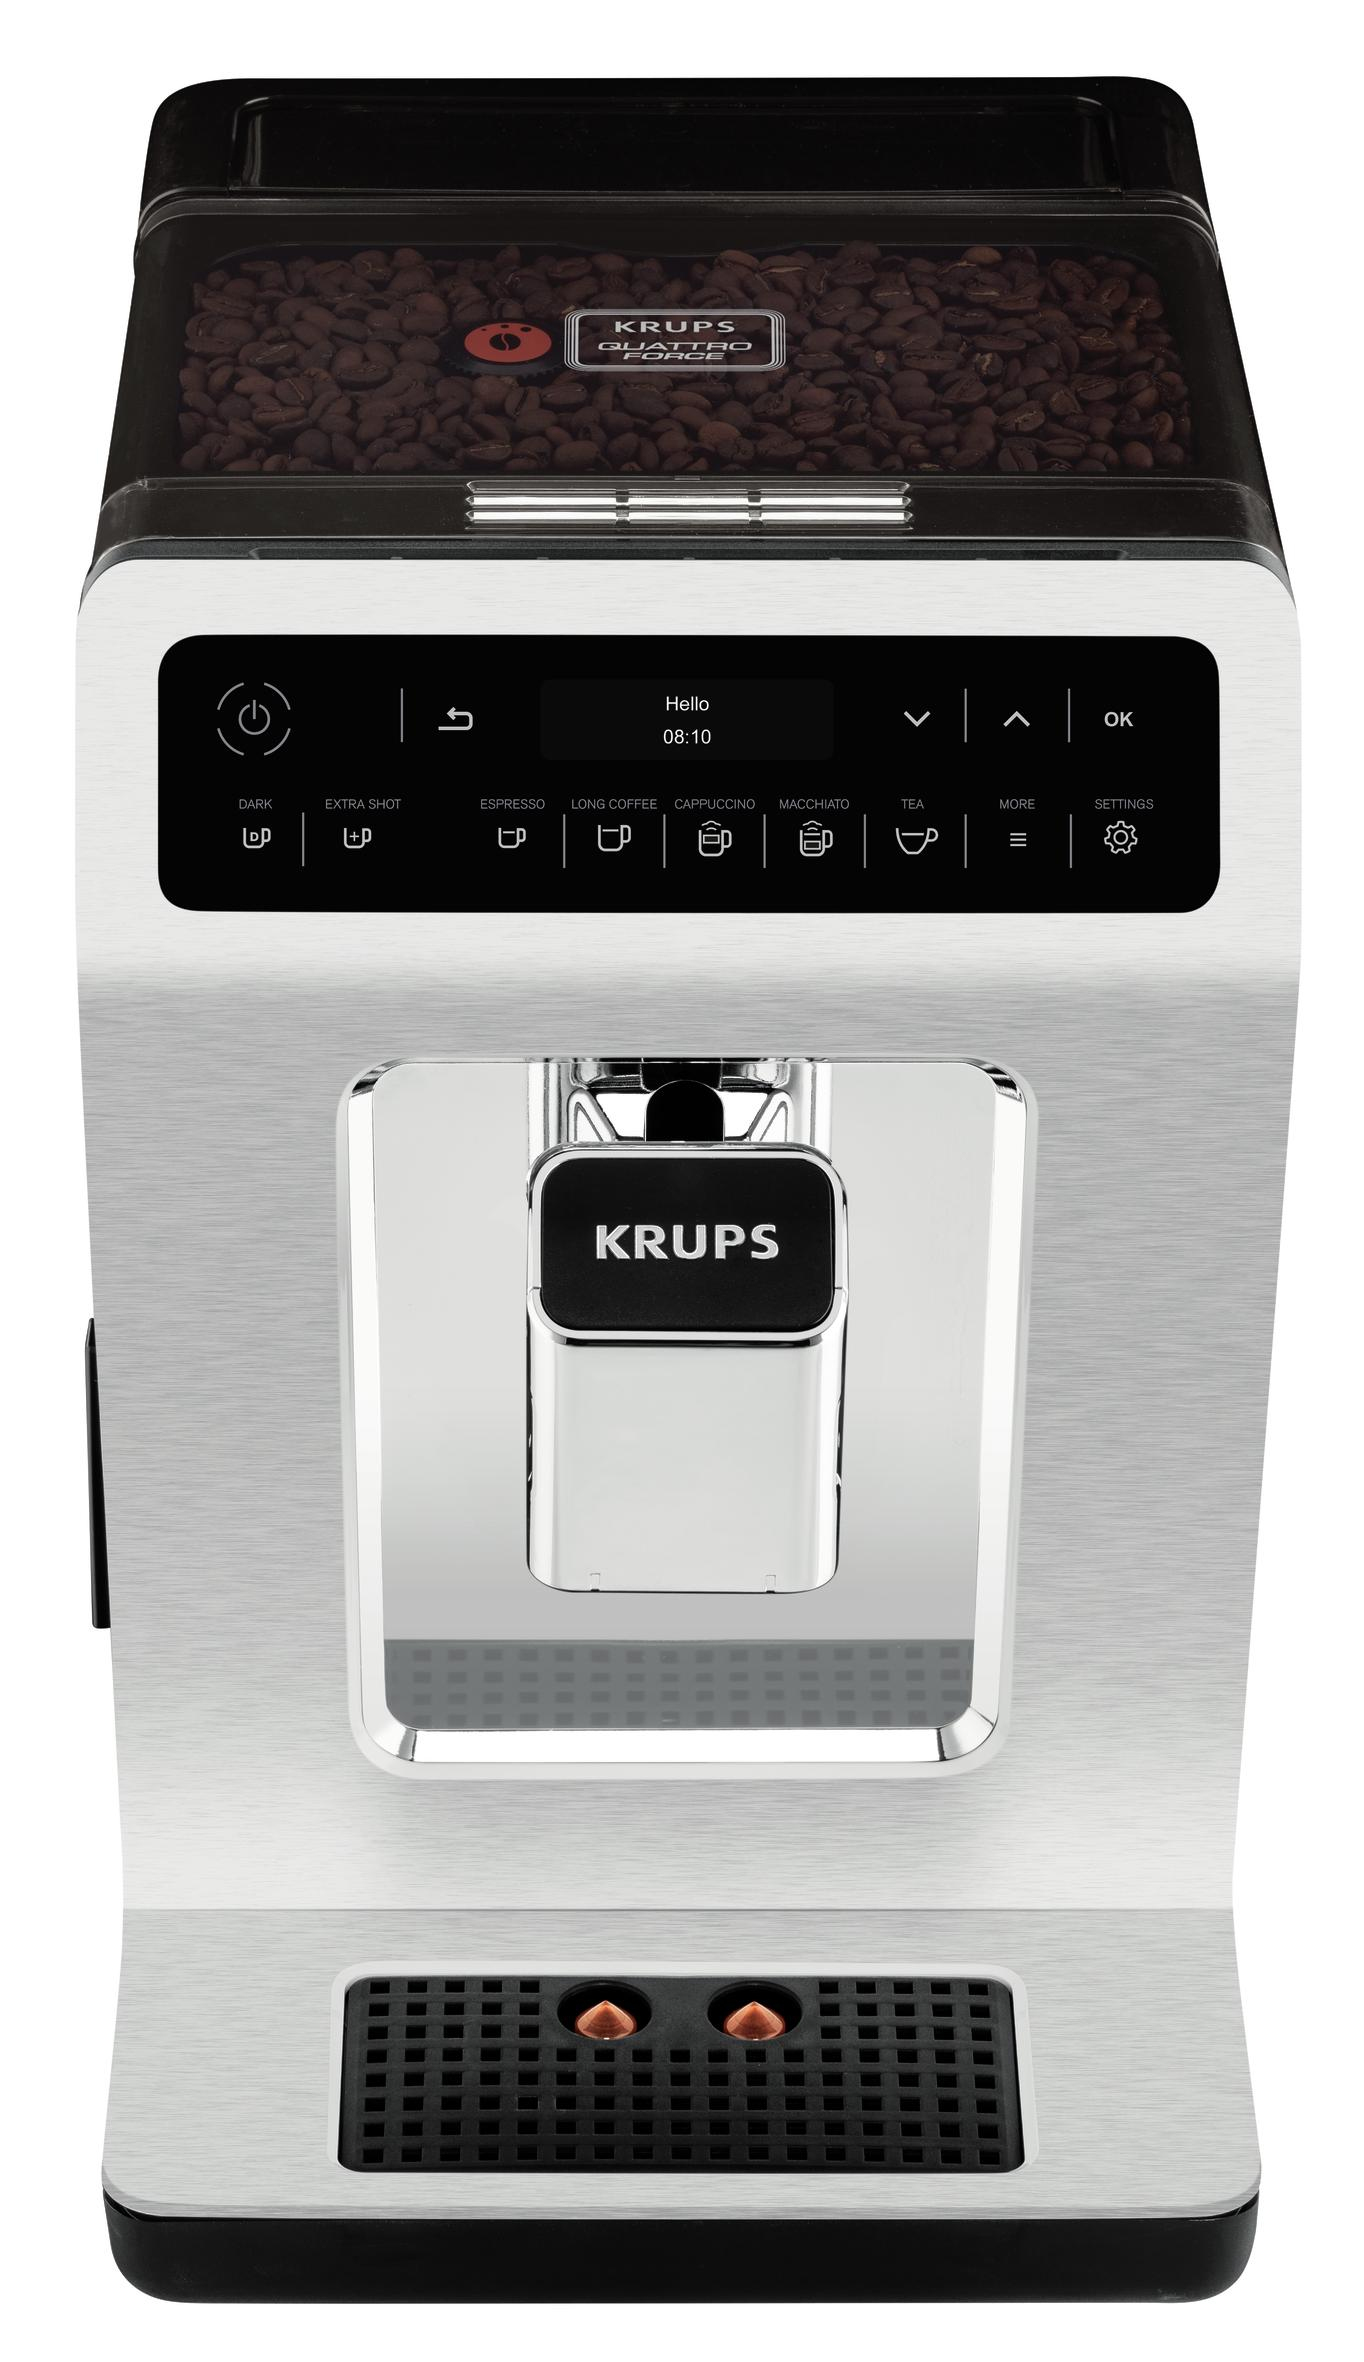 Krups Evidence volautomatische espressomachine - Chrome EA891C chroom, metallic